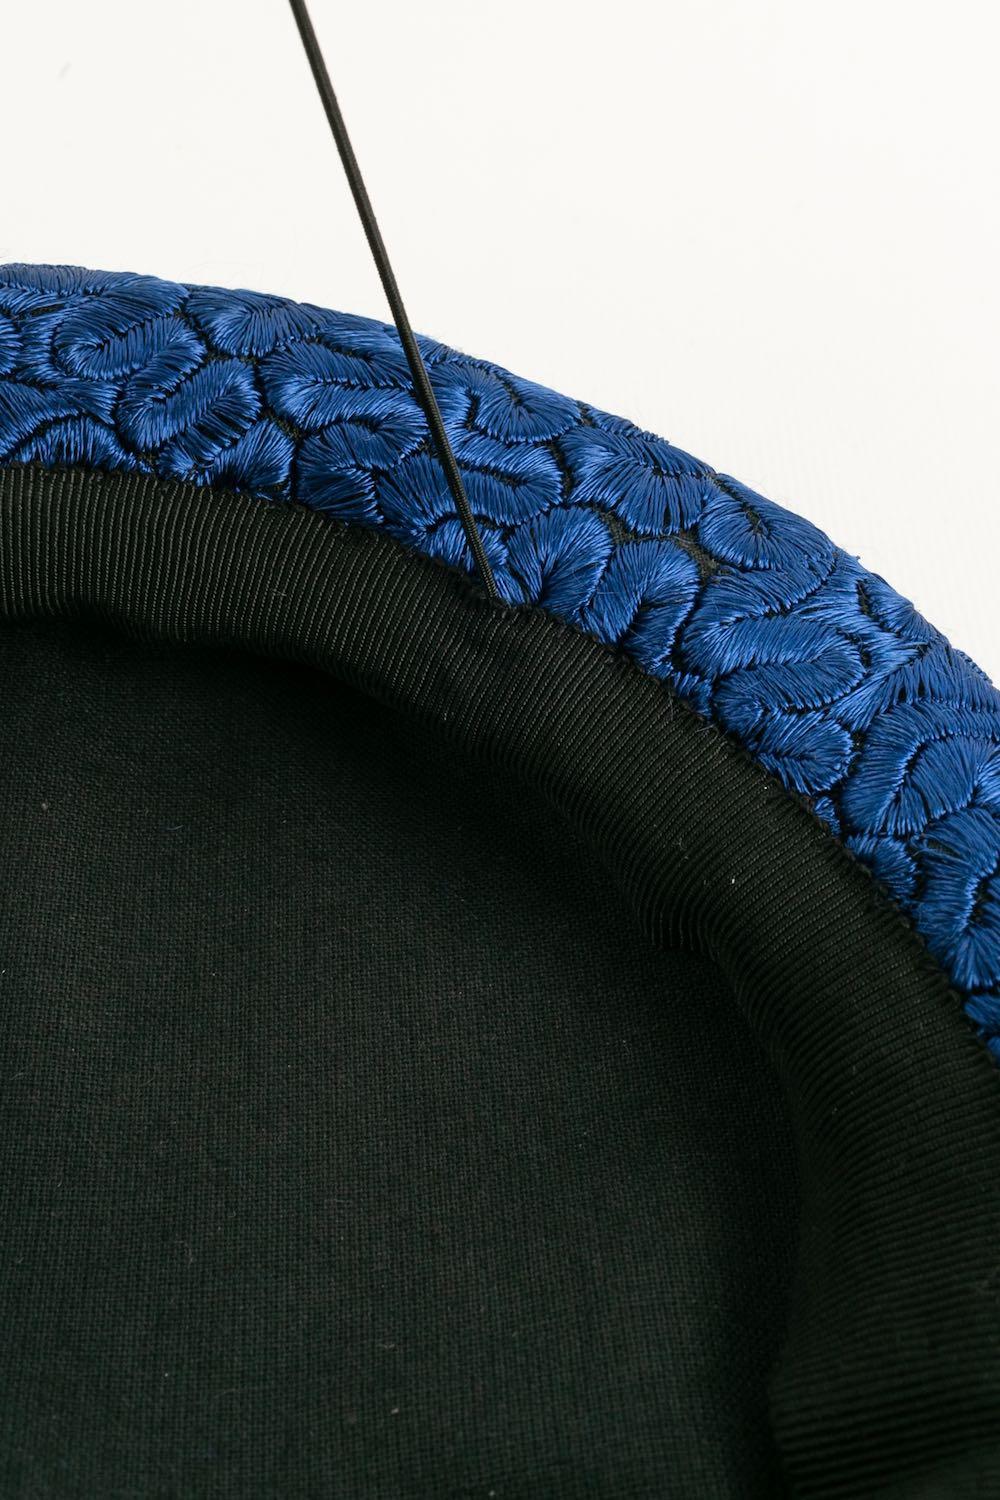 Yves Saint Laurent Black and Blue Hat/Bibi For Sale 2